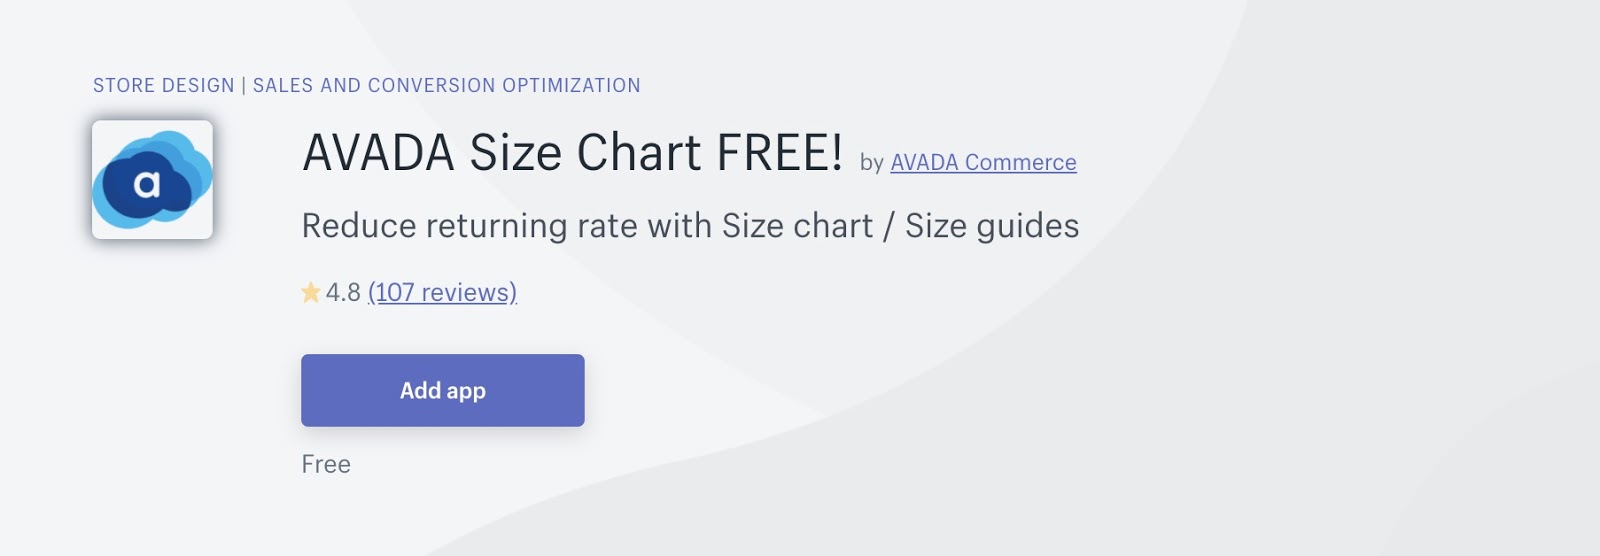 AVADA Size Chart